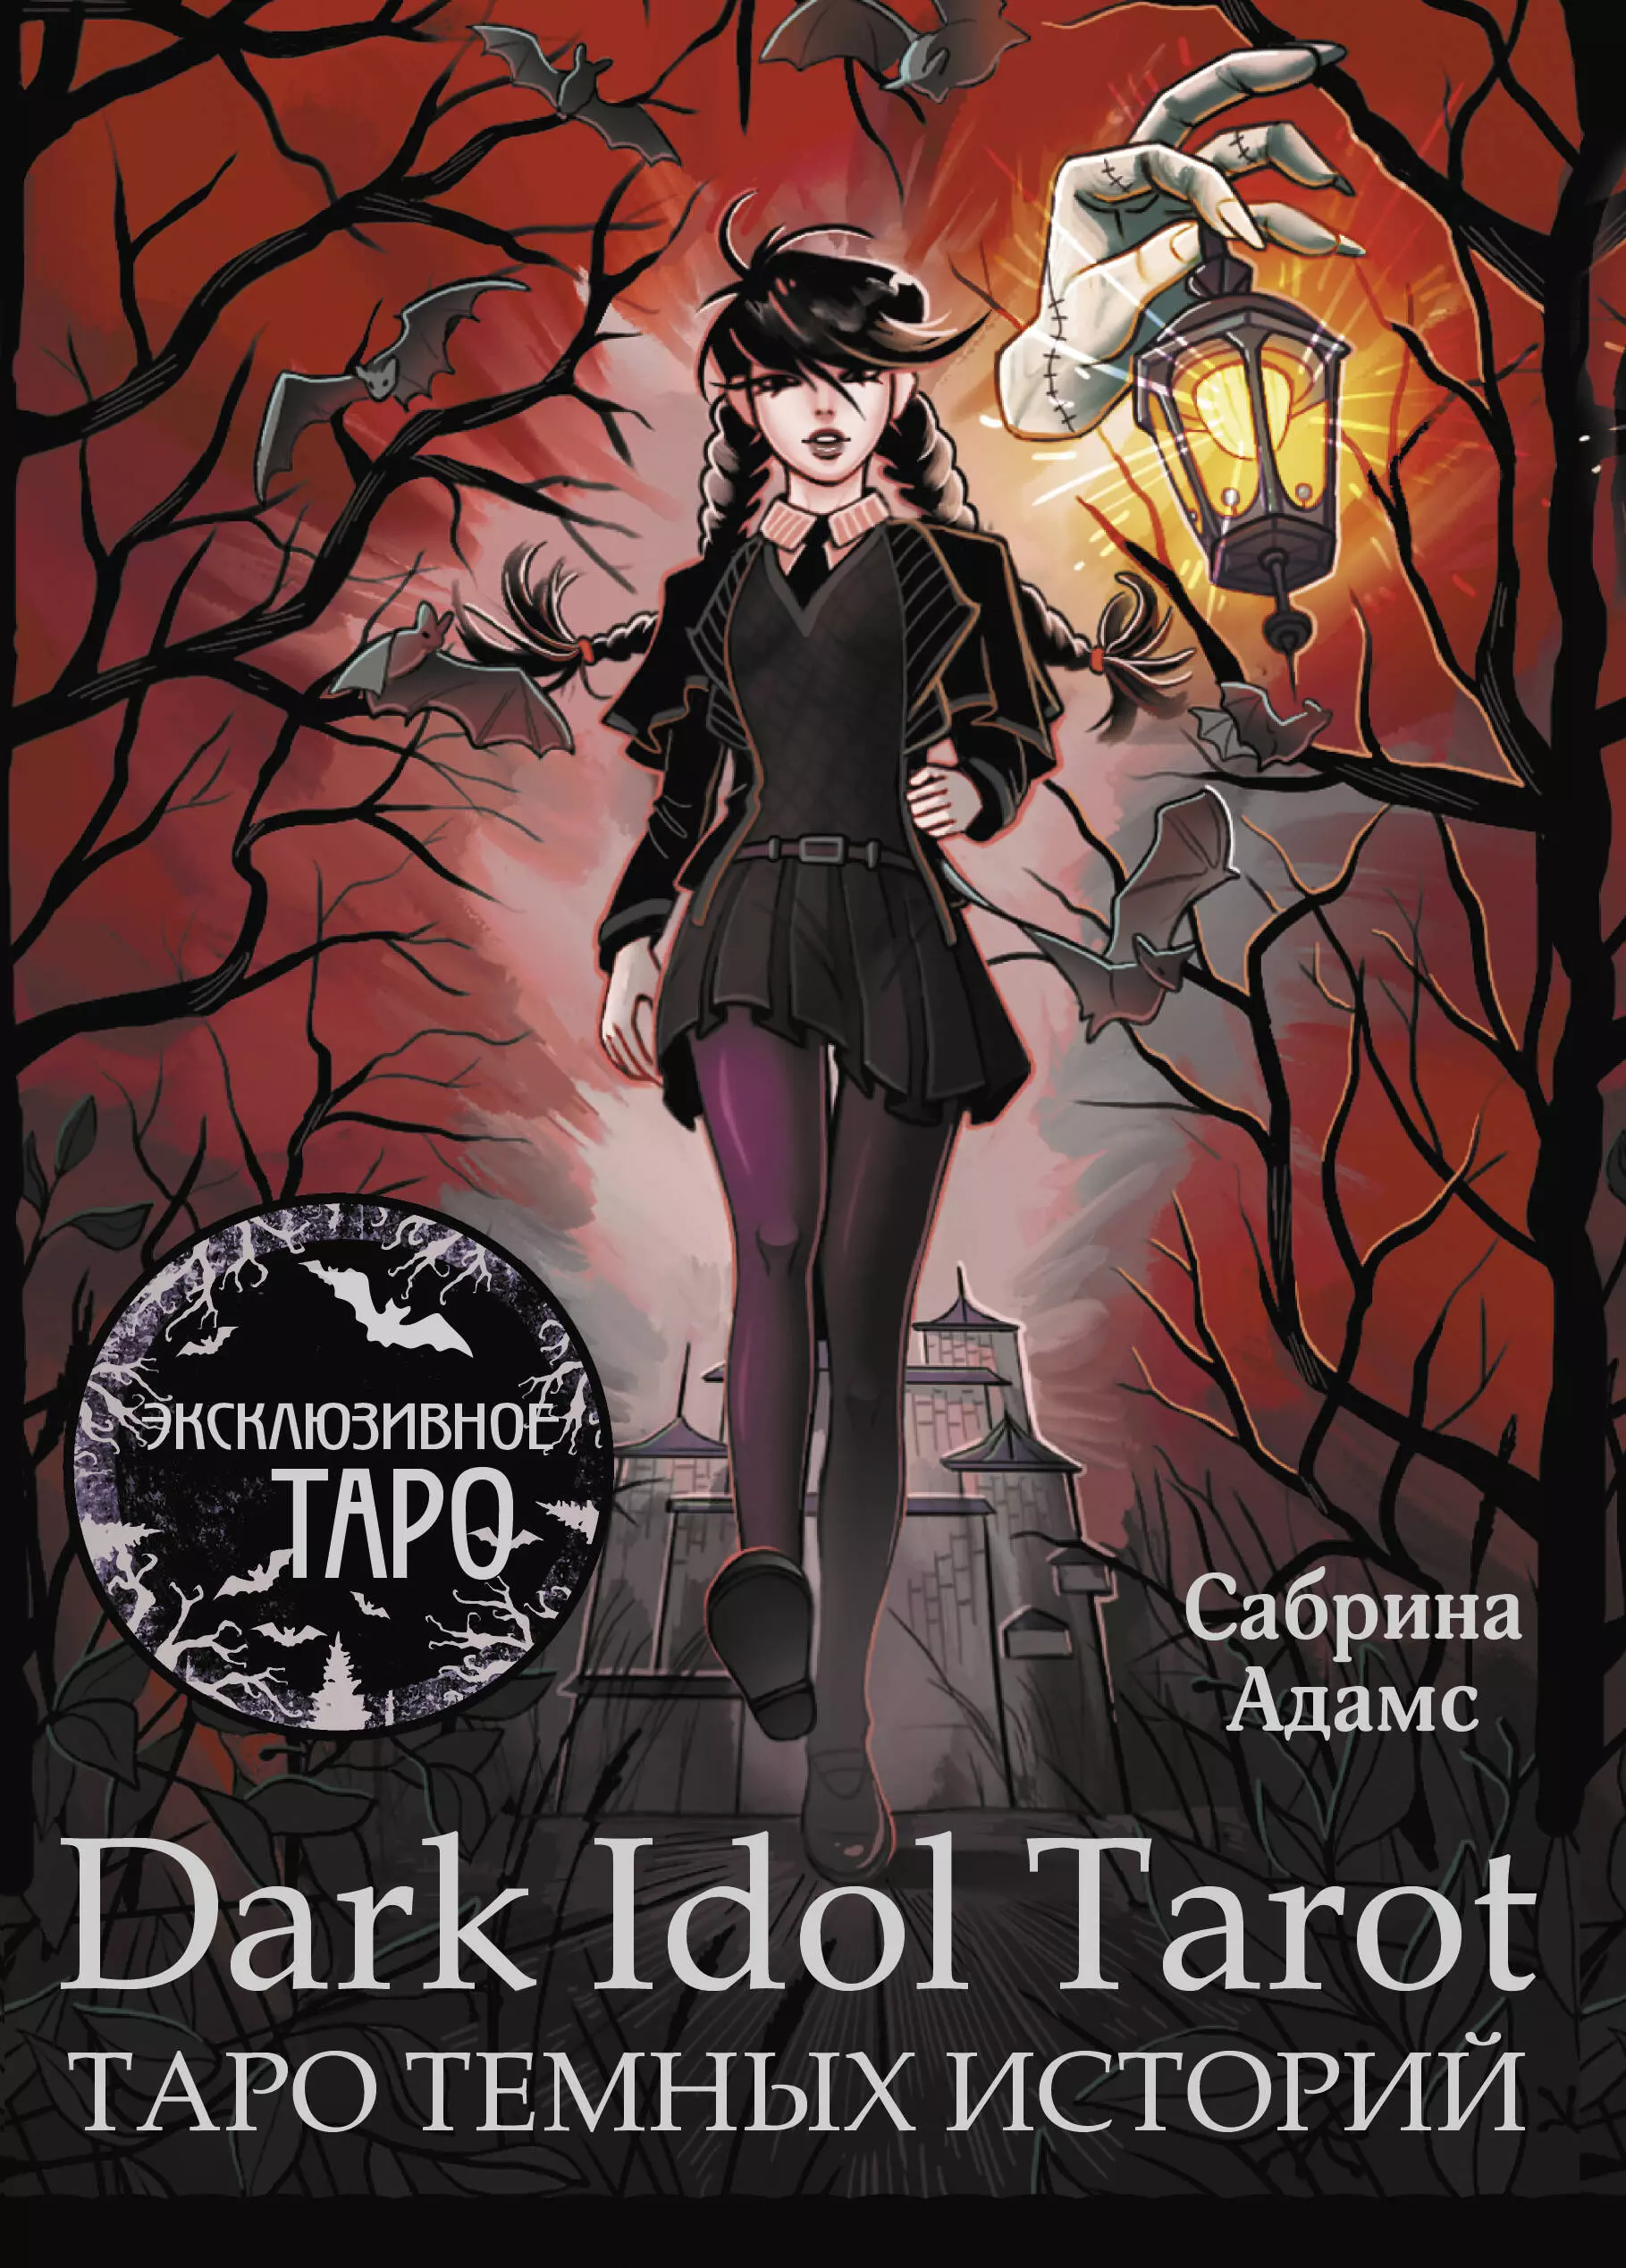 Адамс Сабрина Dark Idol Tarot. Таро темных историй (78 карт и руководство) карты dark wood tarot таро темного леса 78 карт и руководство в подарочном футляре